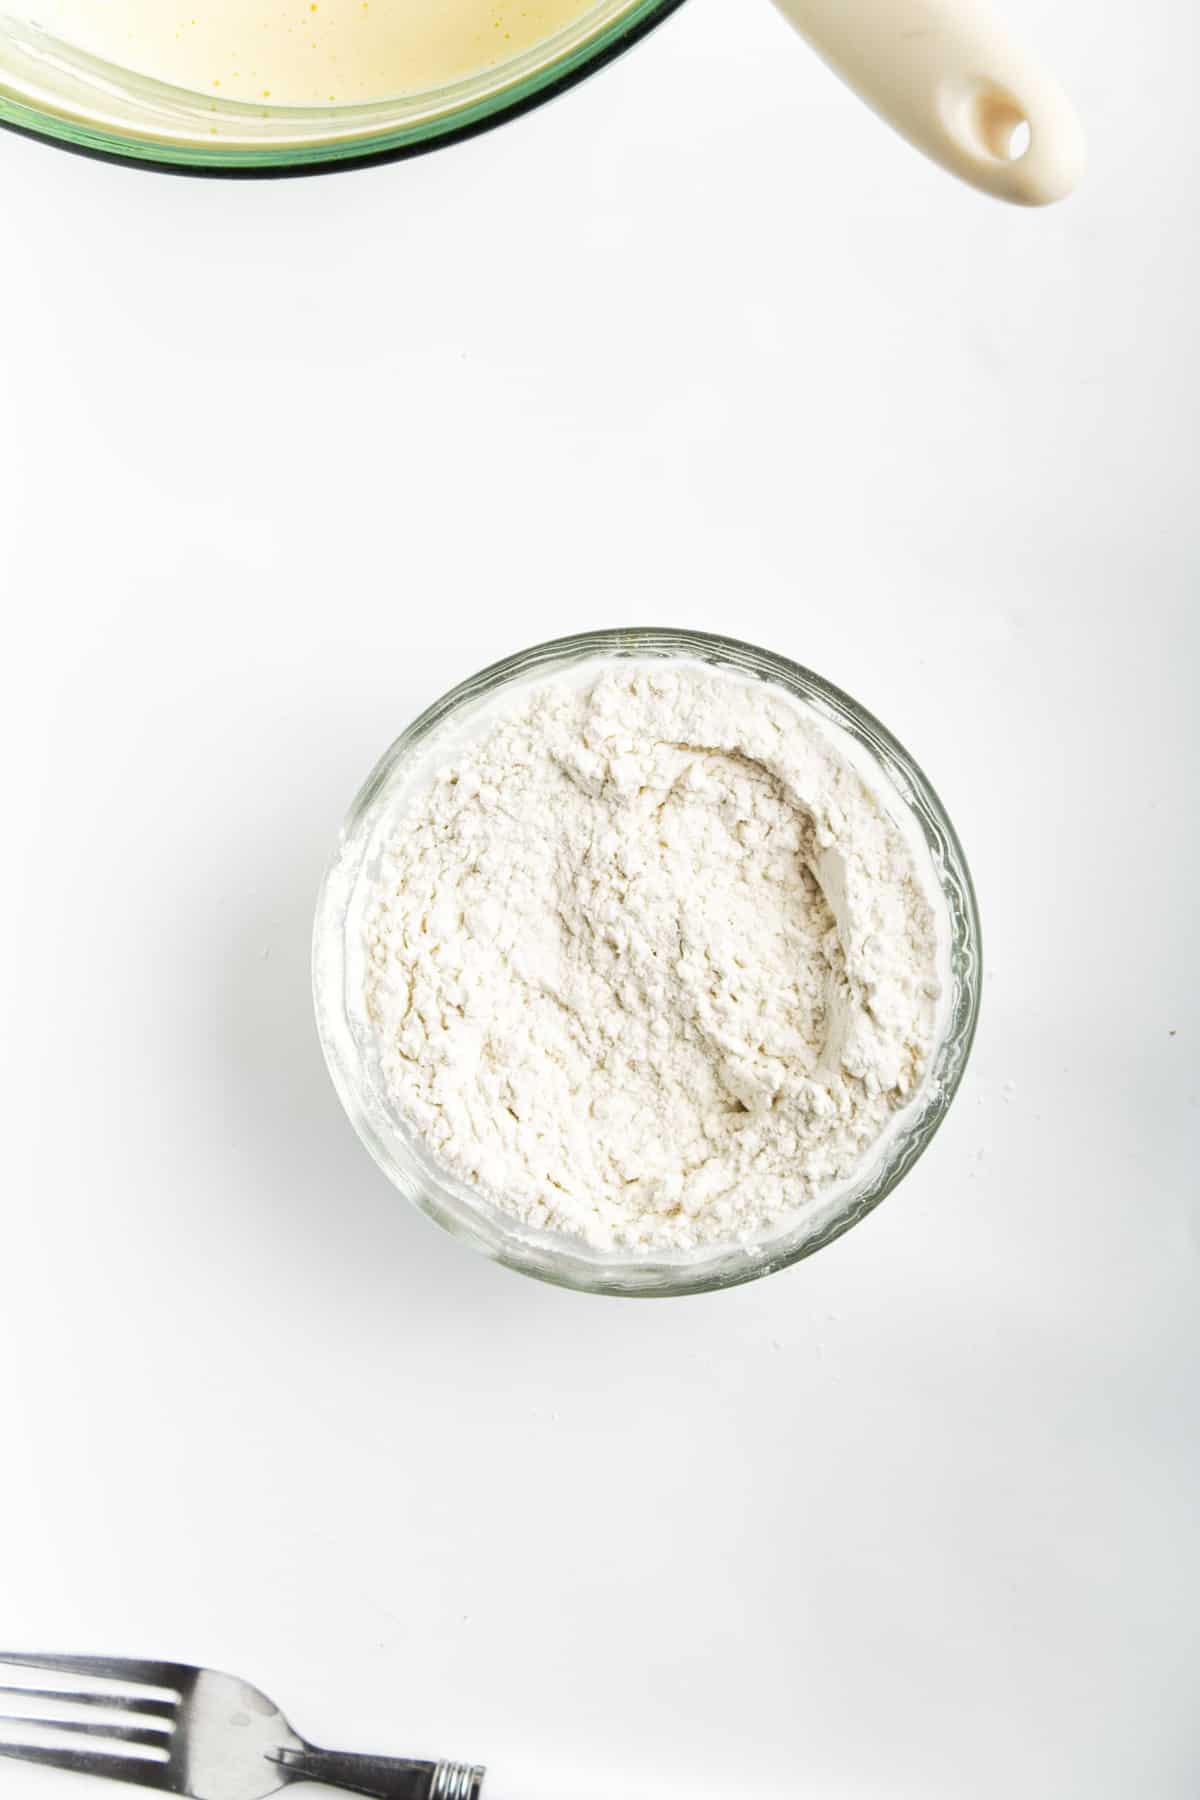 Flour, salt, baking powder in a glass bowl on a white counter.